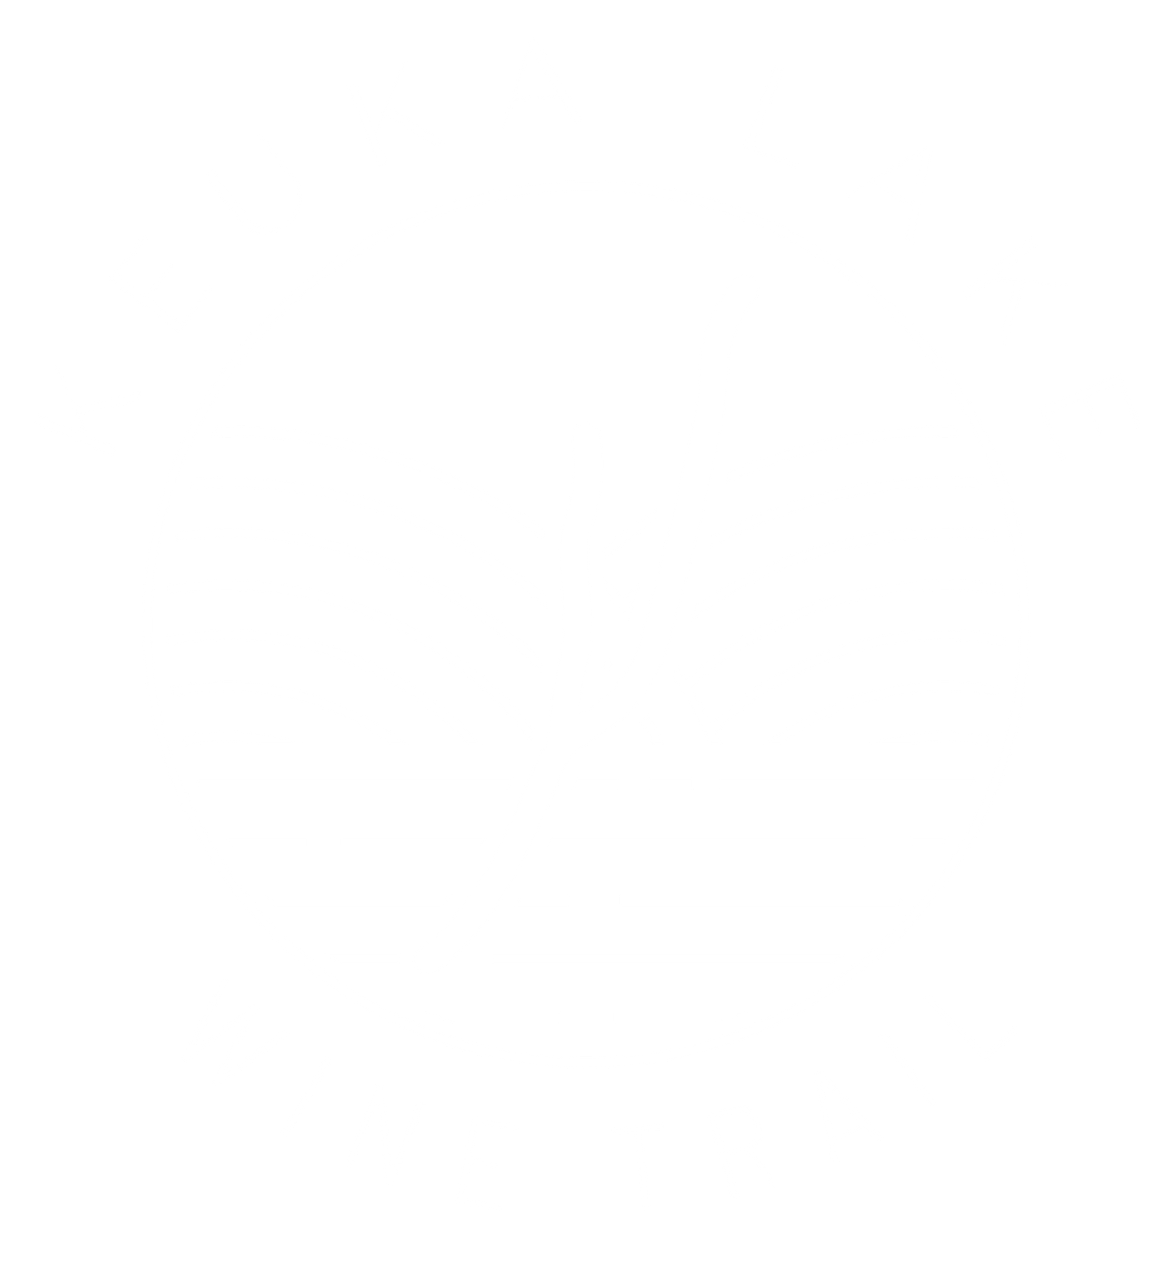 finger lakes wine trail tours